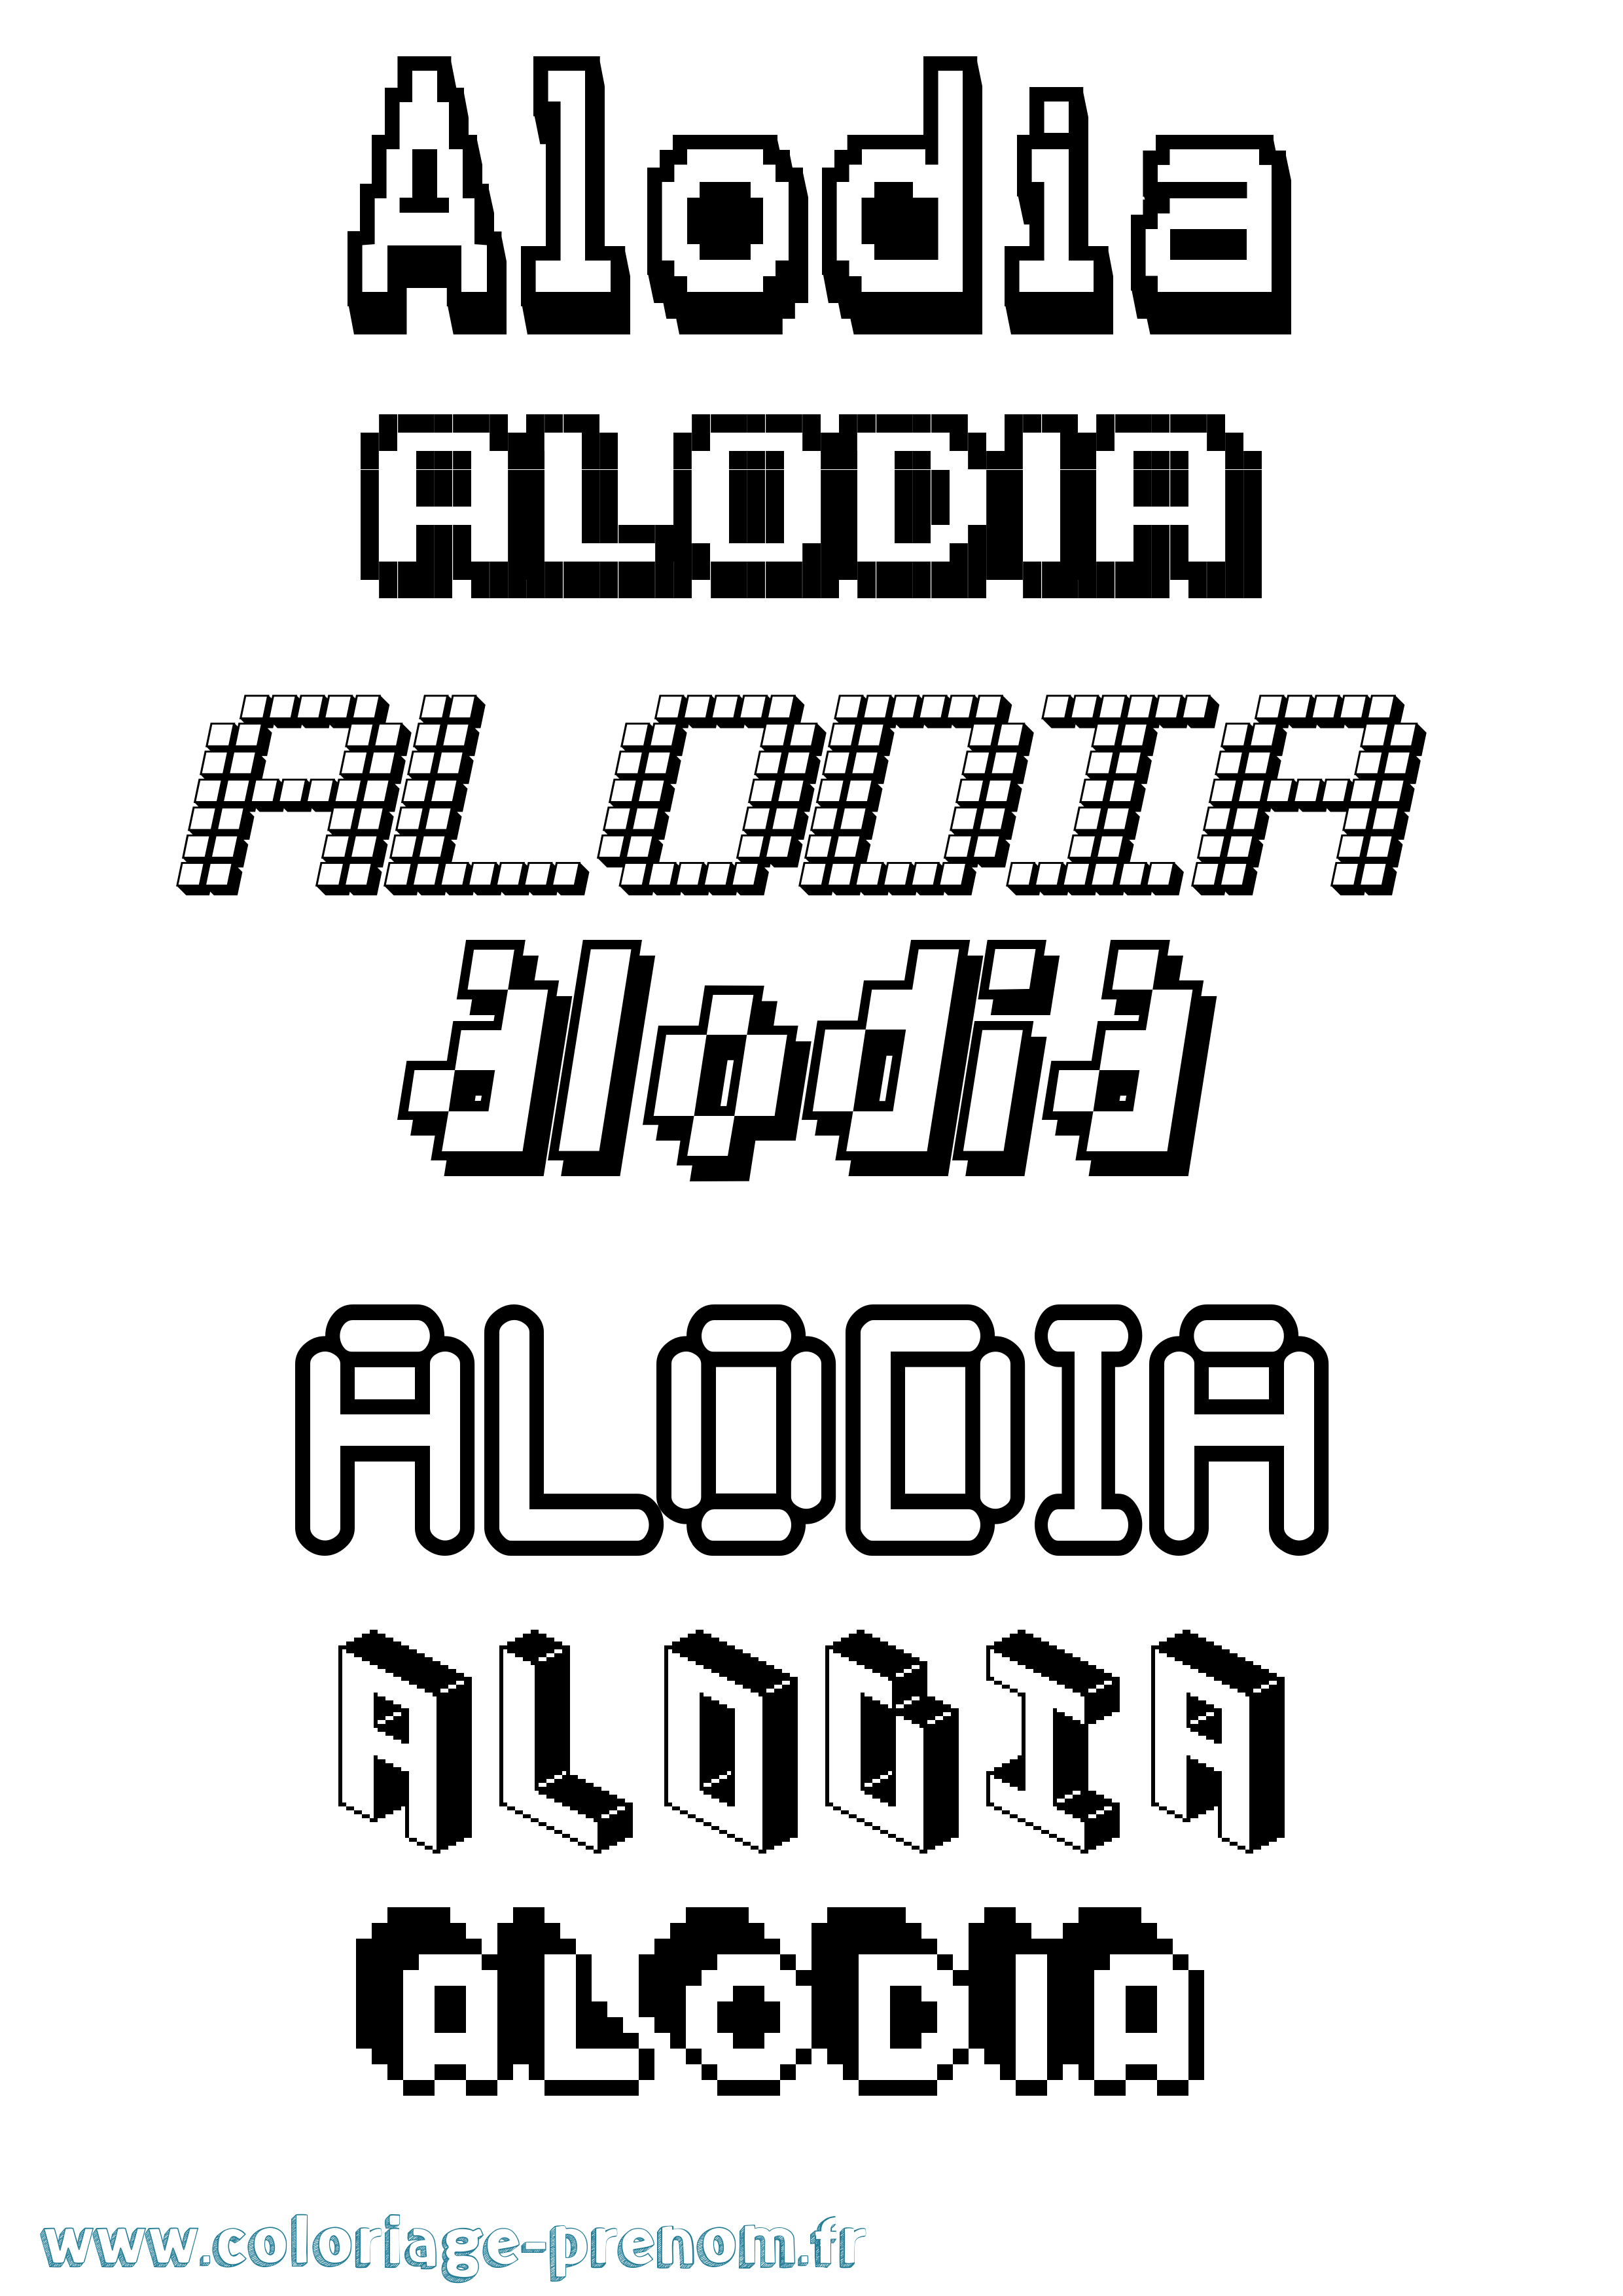 Coloriage prénom Alodia Pixel